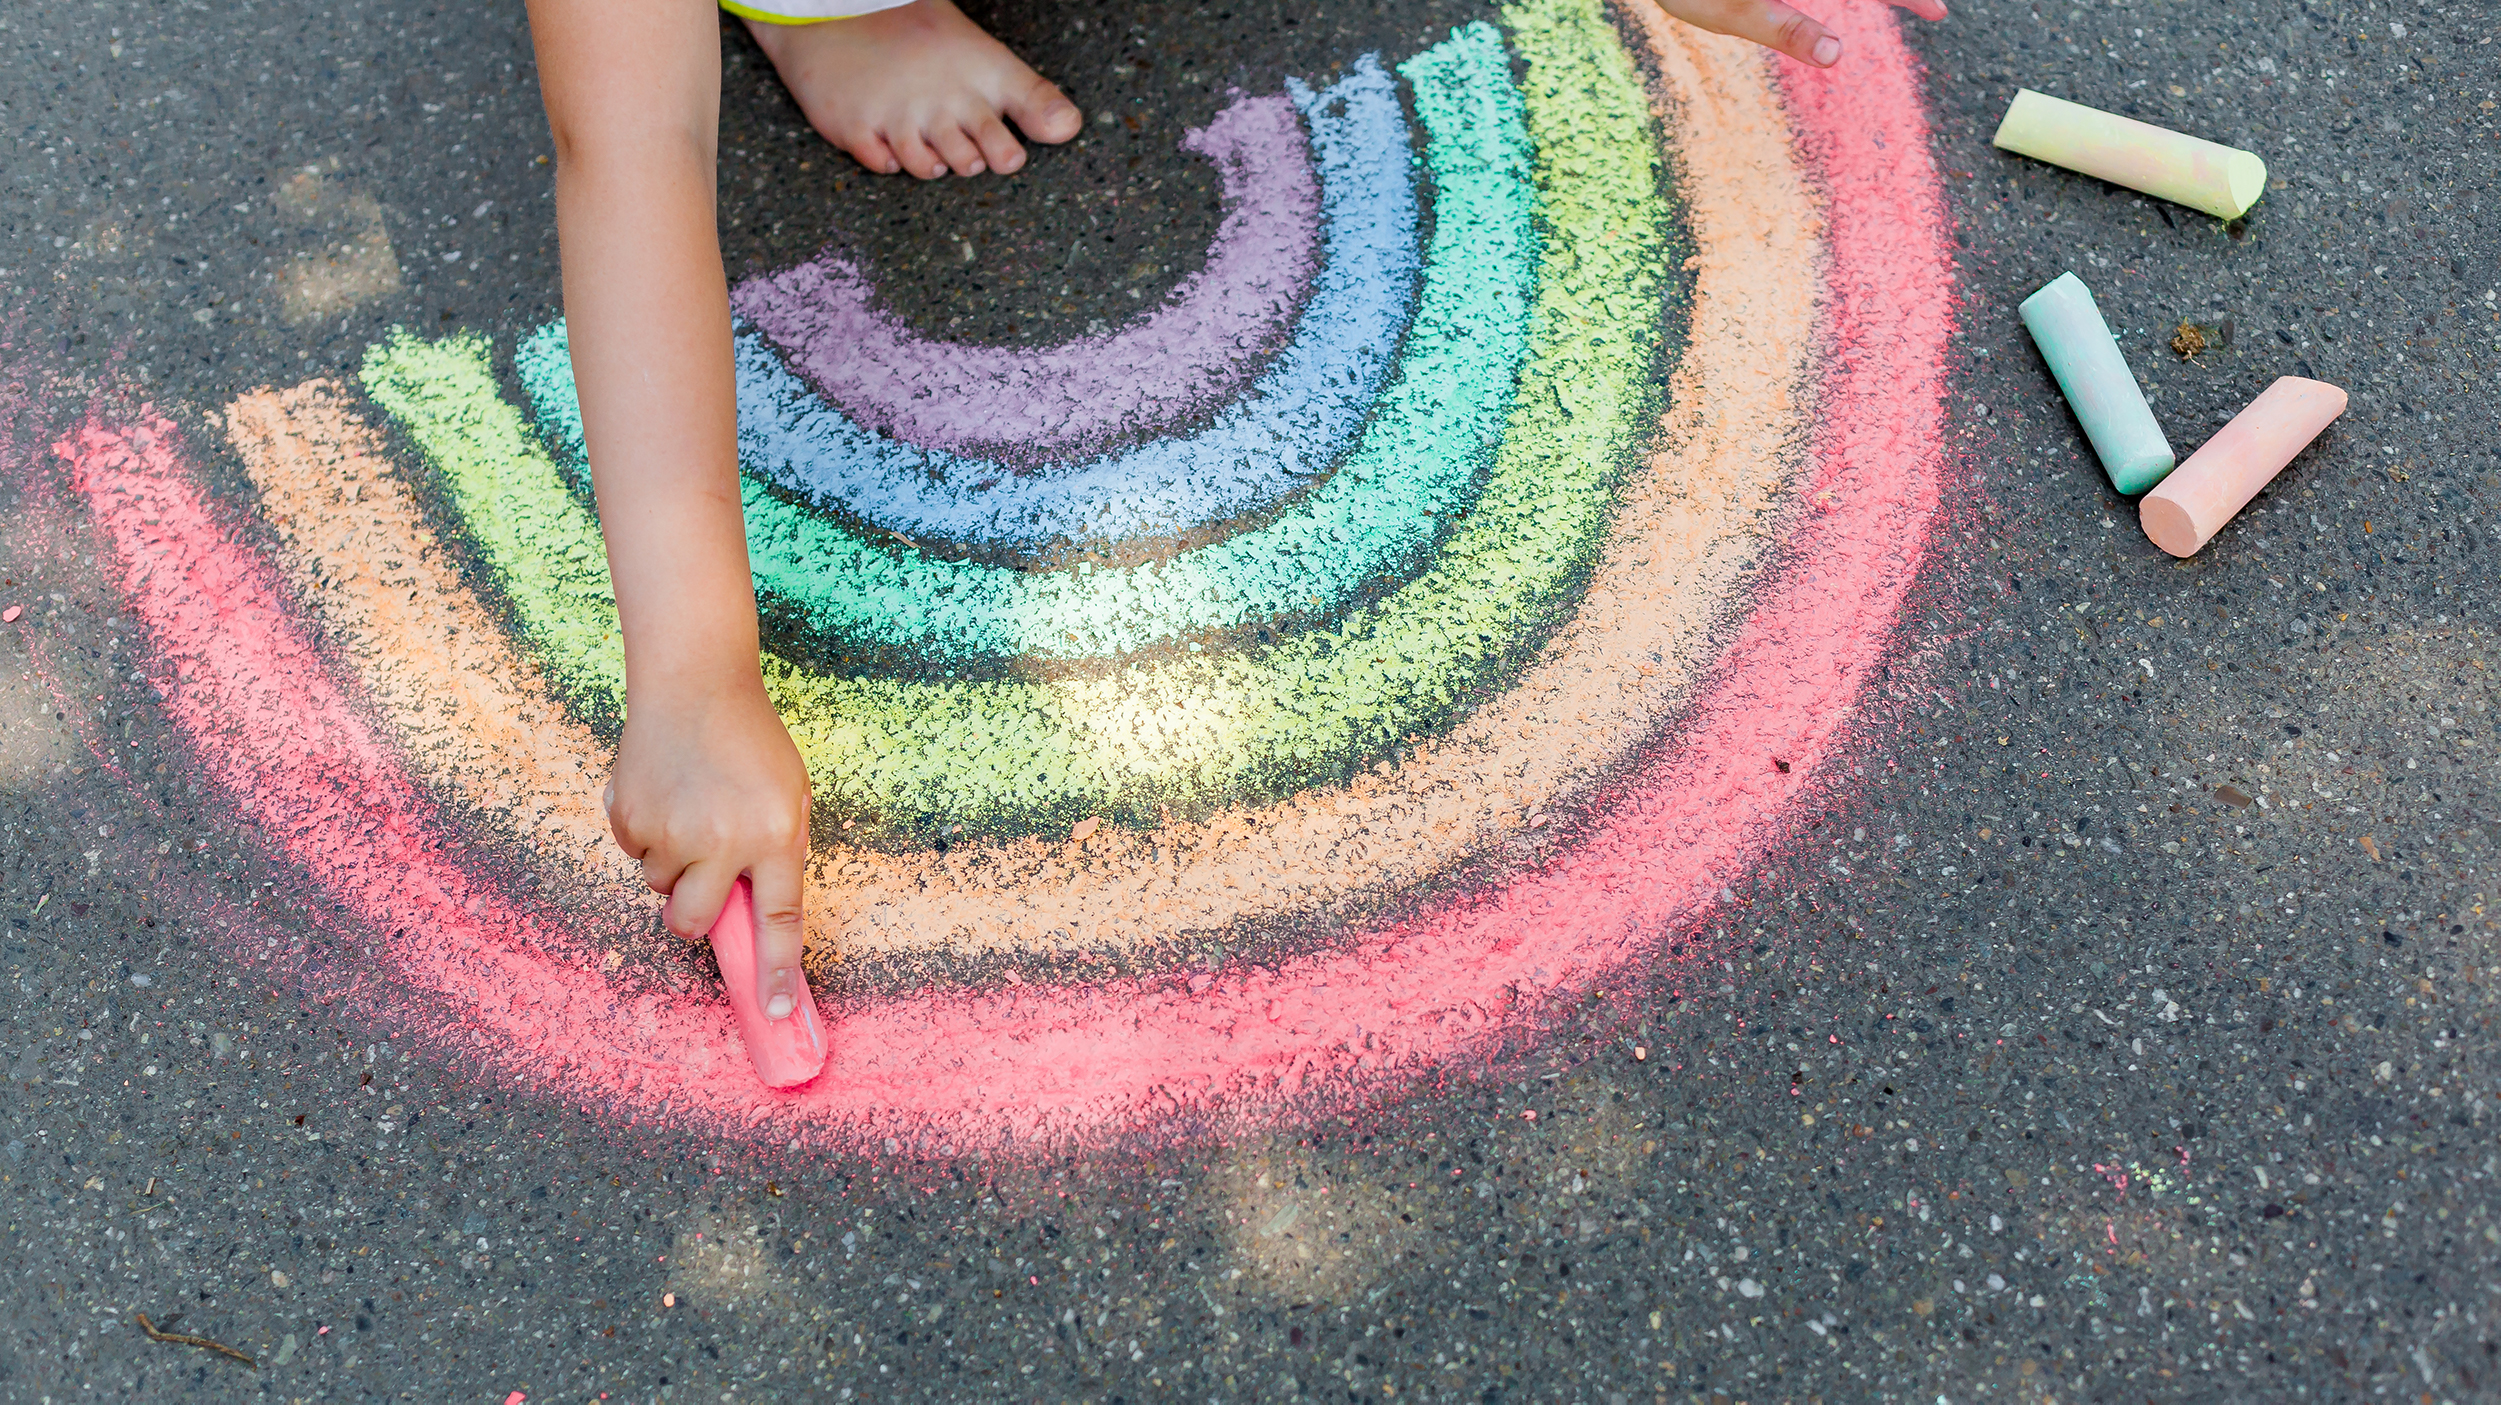 Chalk Art Ideas The Best Outdoor And Chalk Art Projects For Kids Cnn Underscored